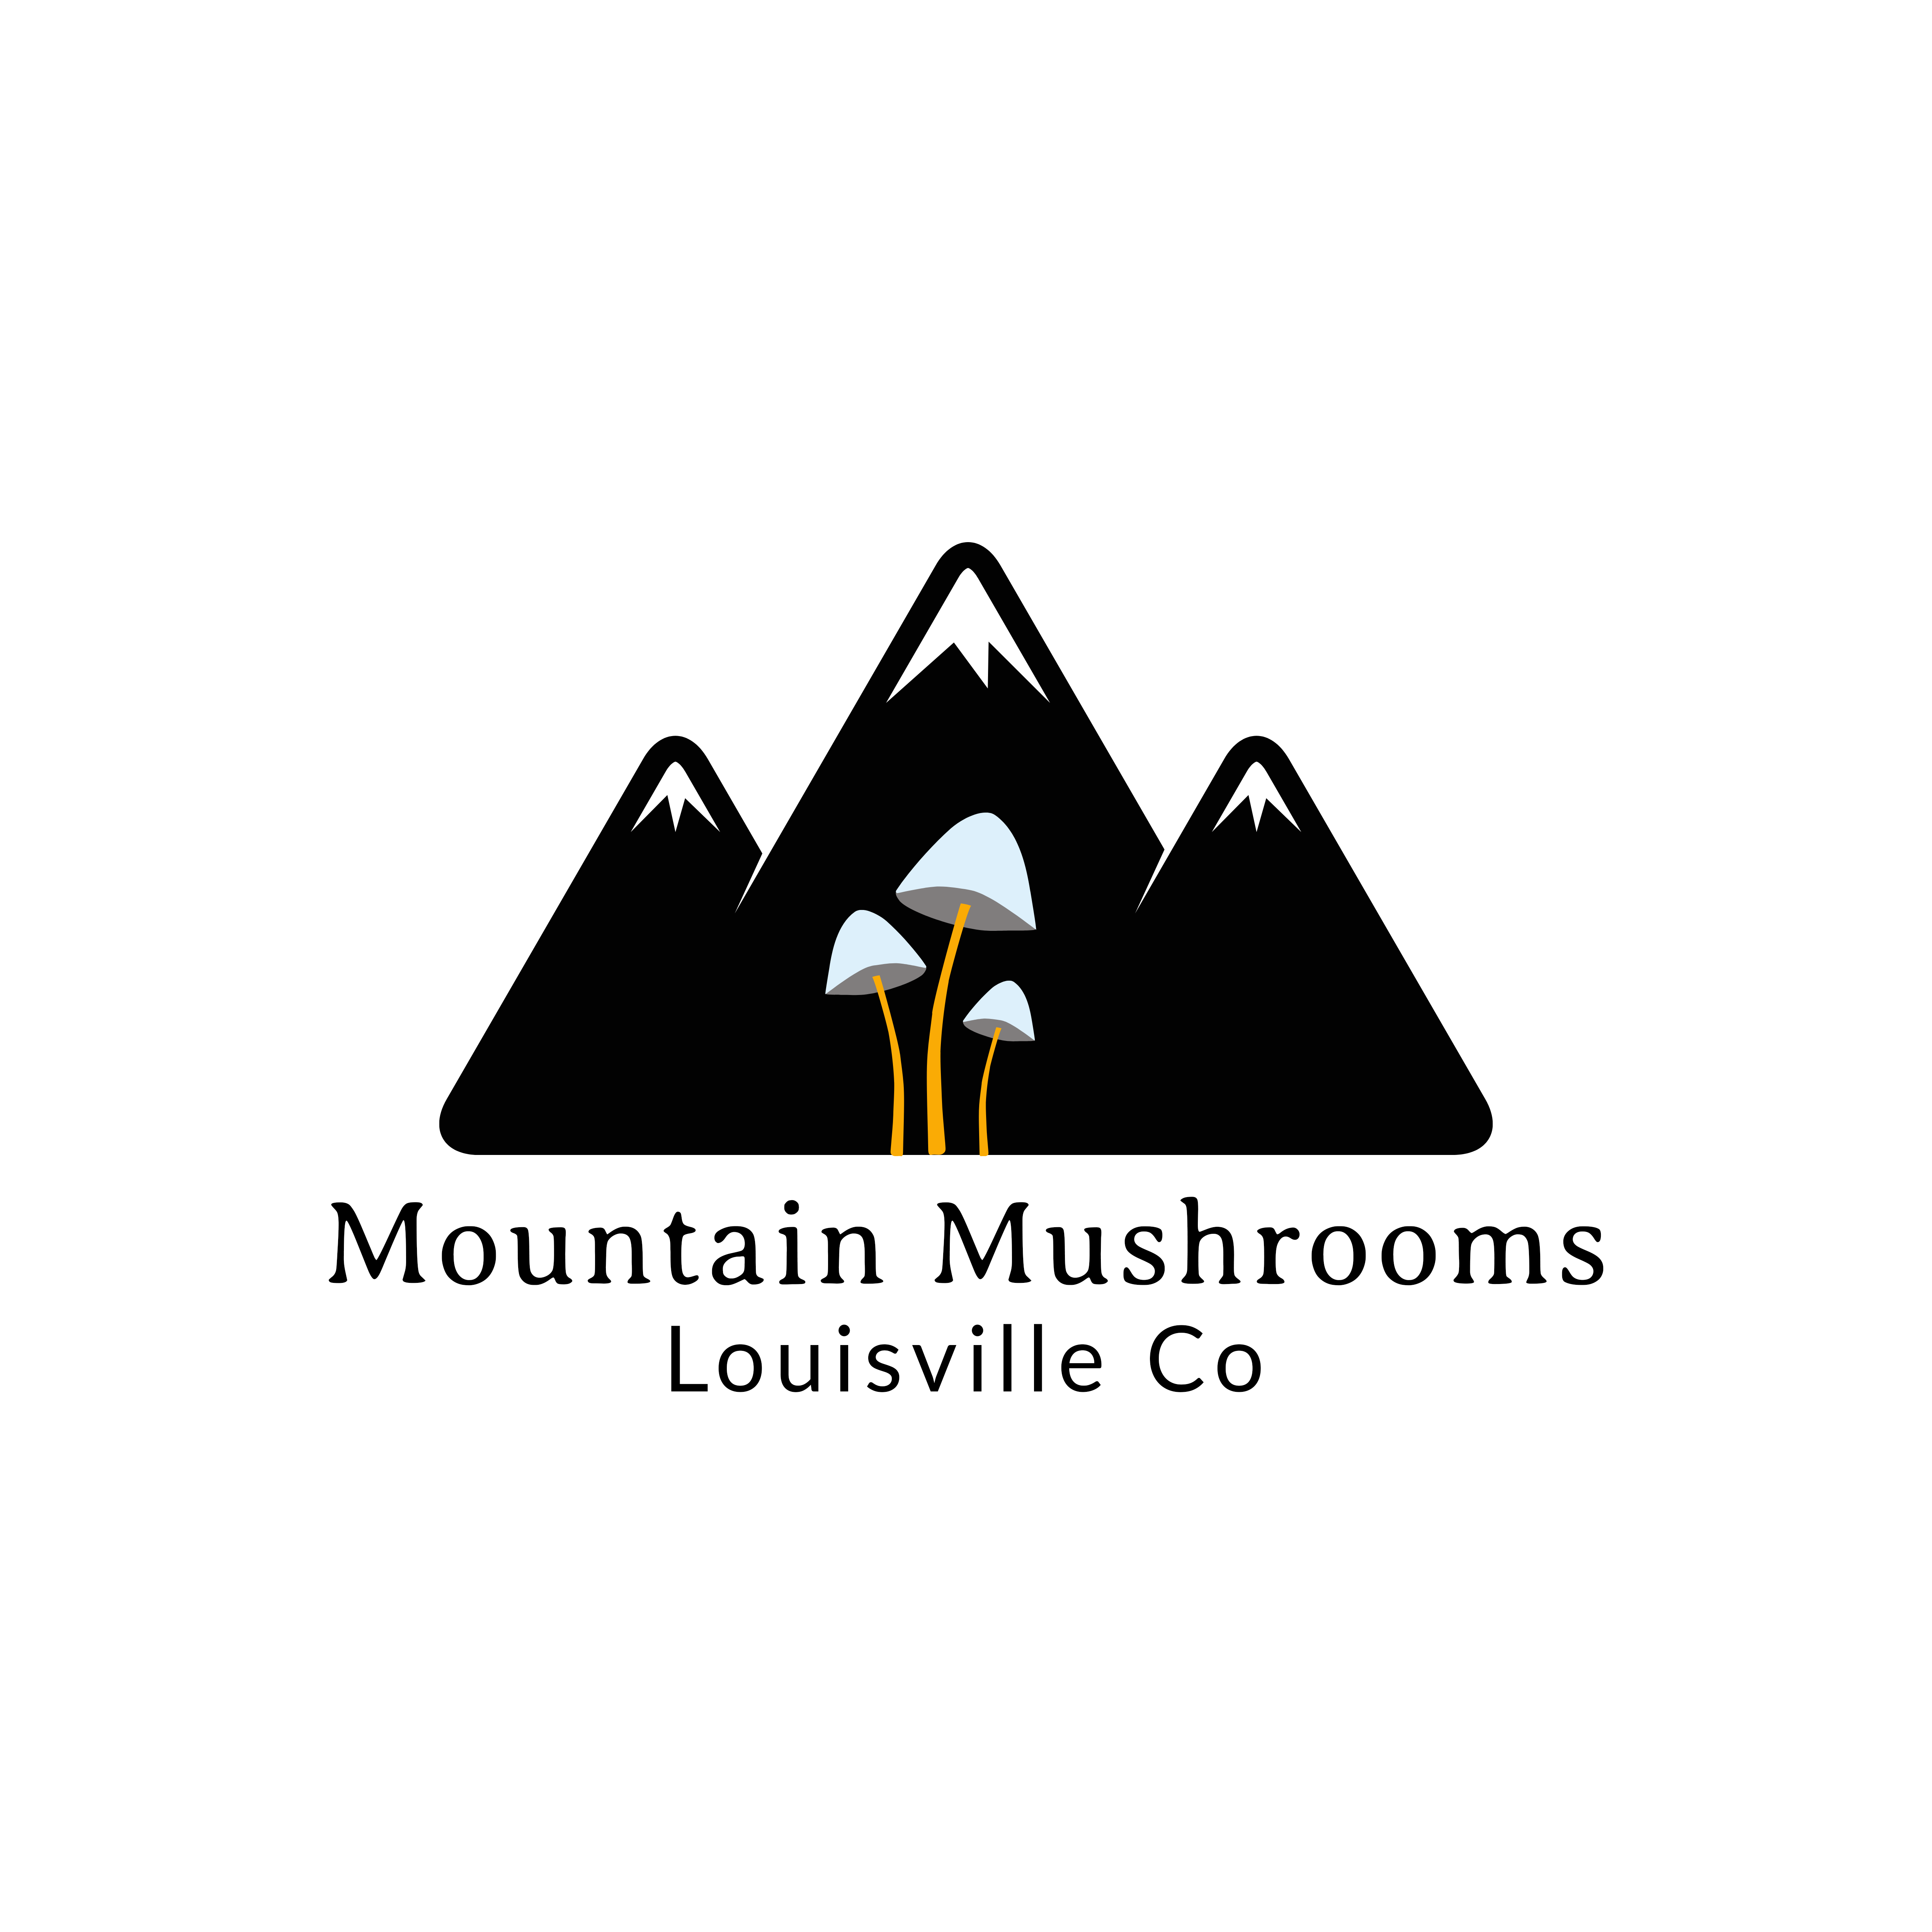  Mountain Mushrooms